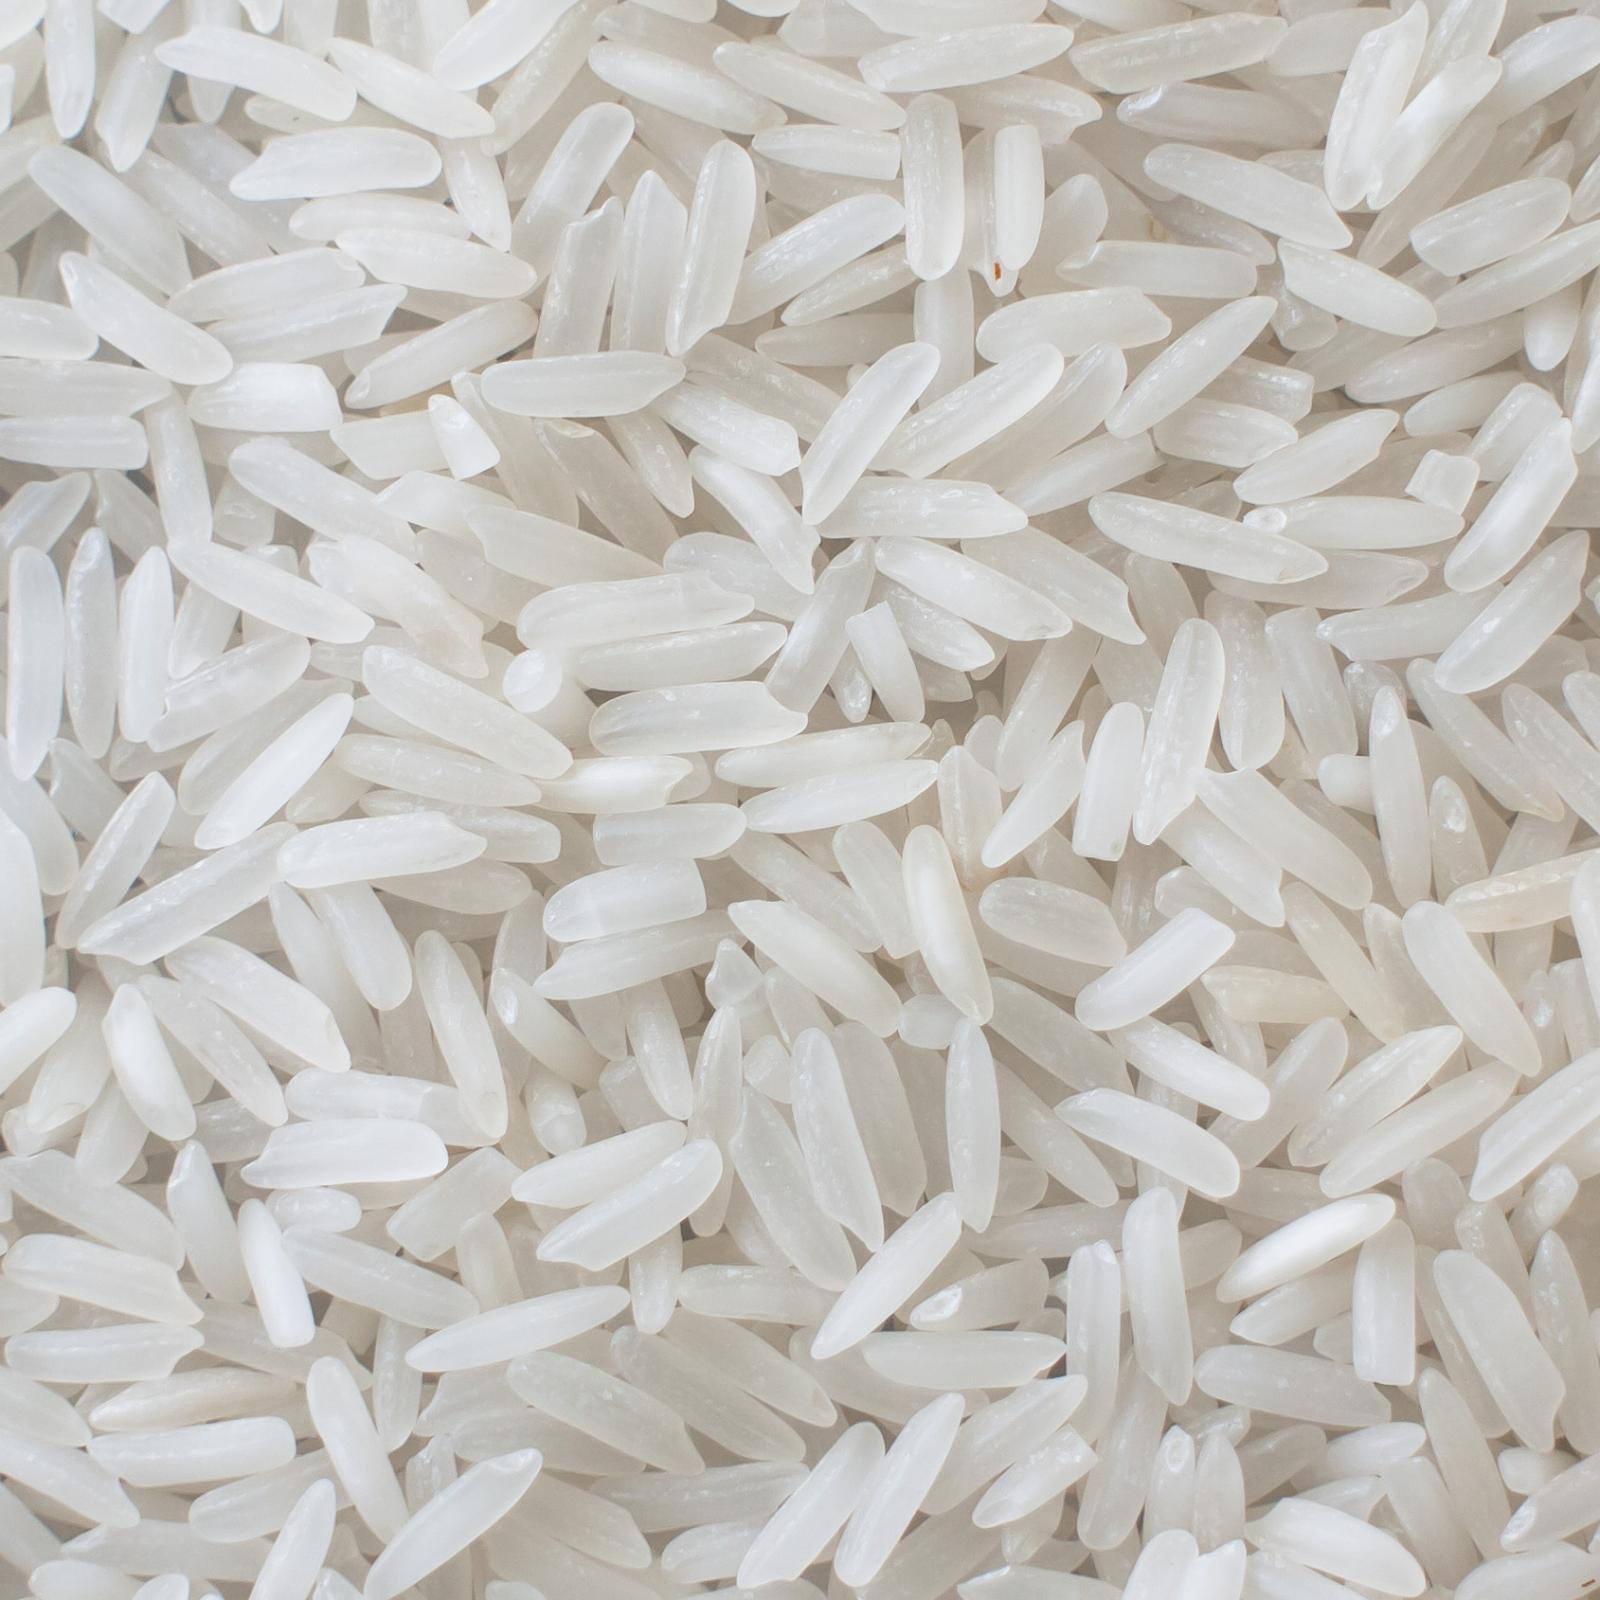 Broken rice and polished rice | Feedipedia